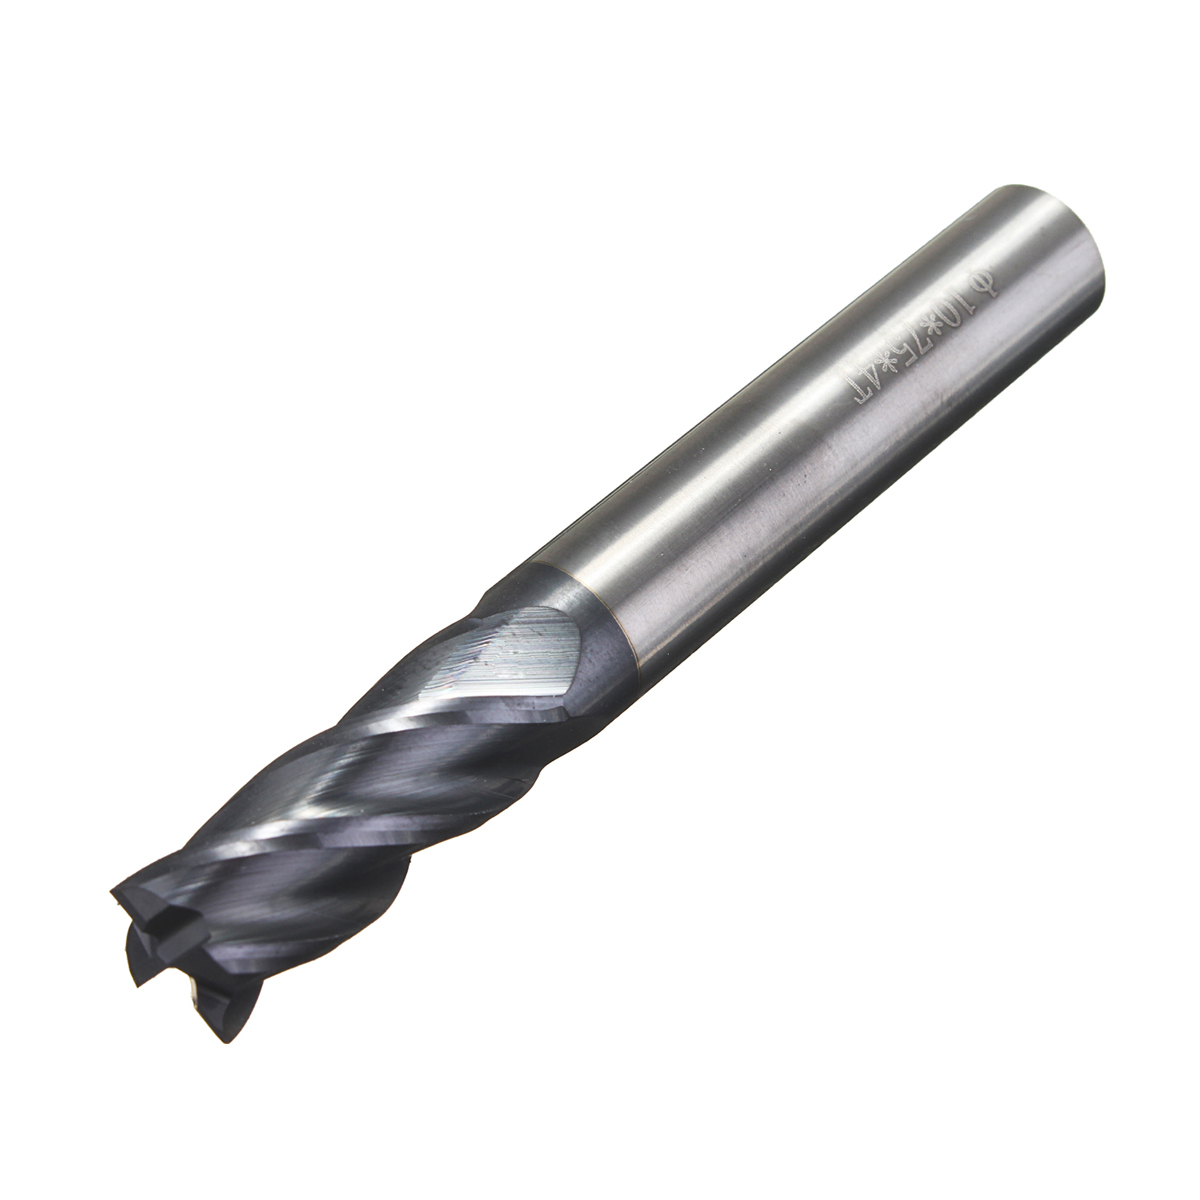 7pcs-1-10mm-4-Flutes-End-Mill-Cutter-Tungsten-Carbide-Milling-Cutter-CNC-Tool-1516234-7